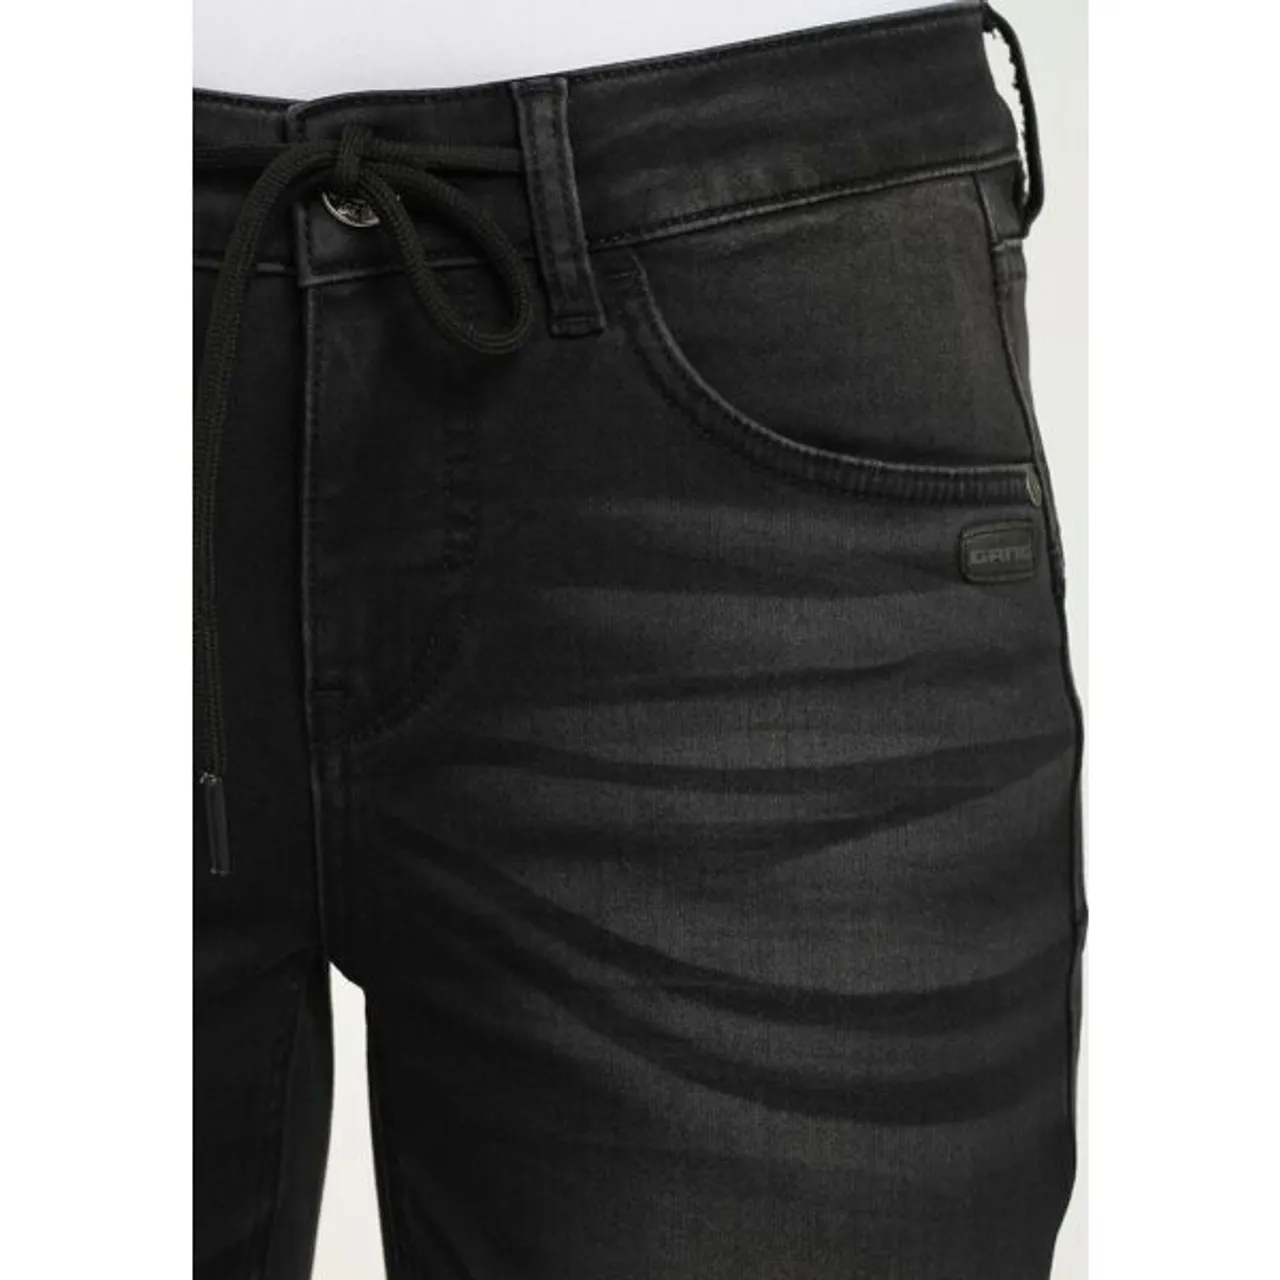 Jogg Pants GANG "94JOLINE JOGG" Gr. 30, N-Gr, schwarz (dark stone (black used)) Damen Jeans Joggpants Track Pants mit passenden Bindeband